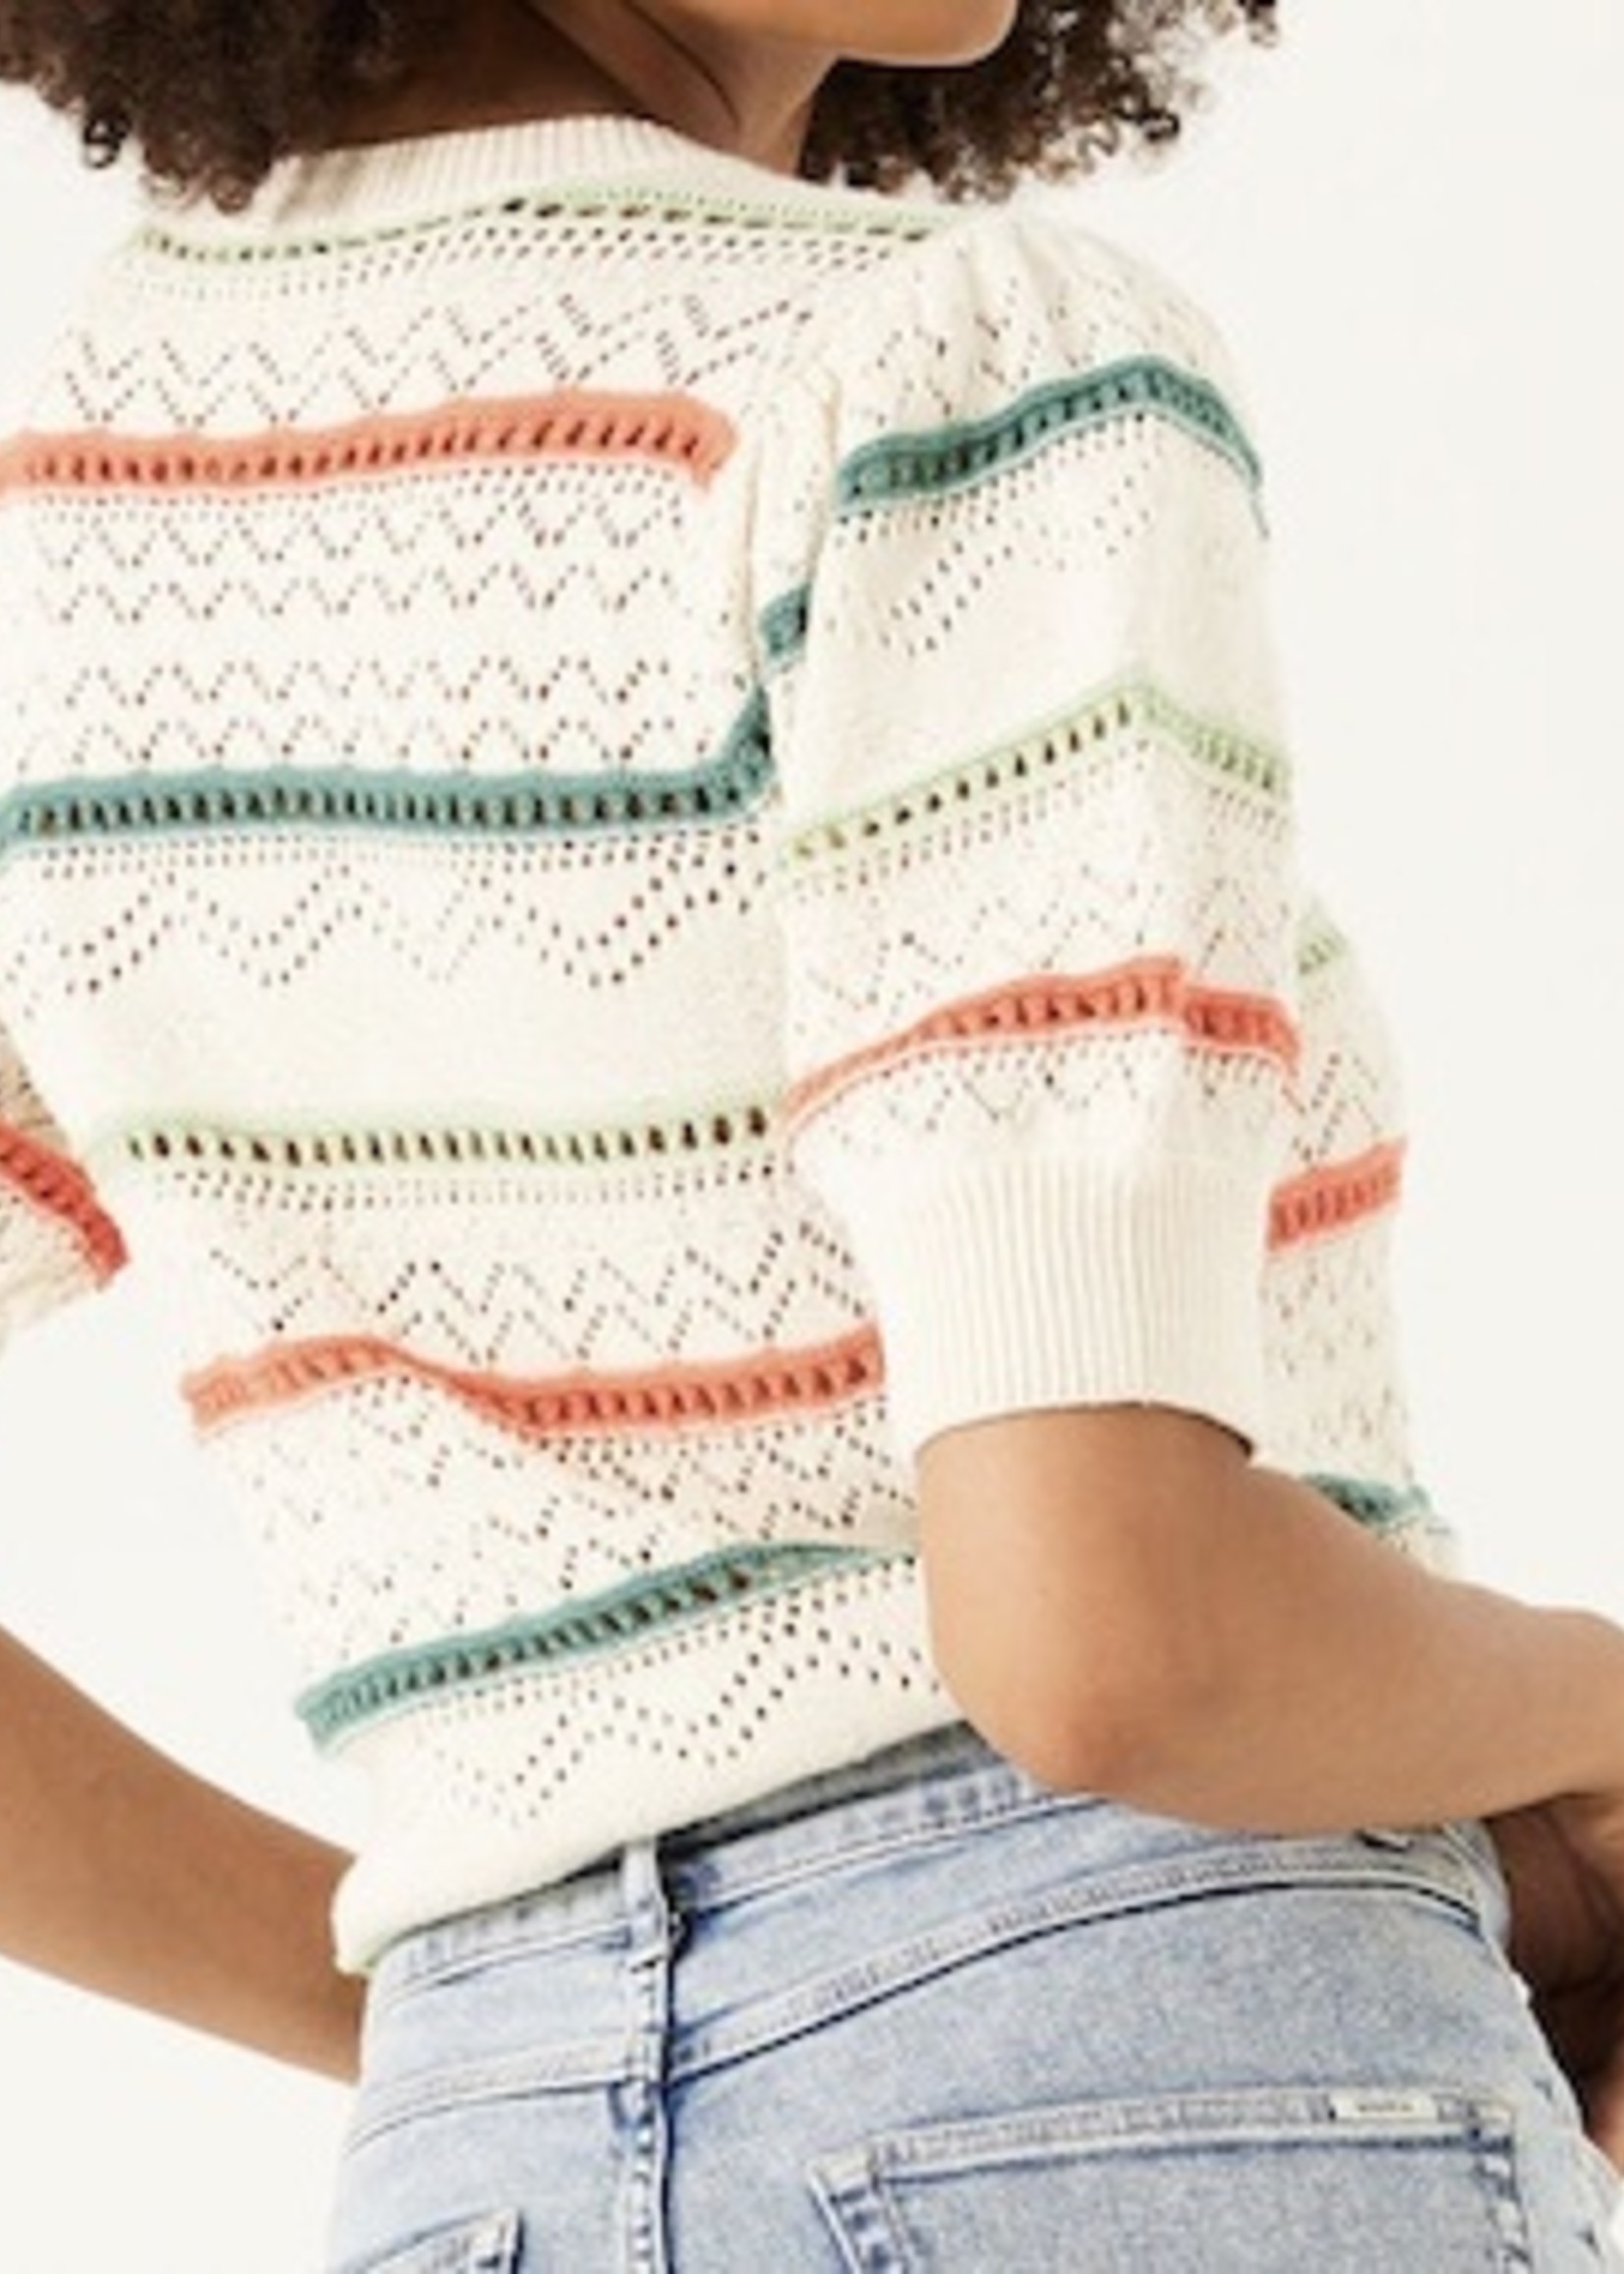 Garcia CLEARANCE: 3/4 Sleeve Pointelle Crewneck Sweater